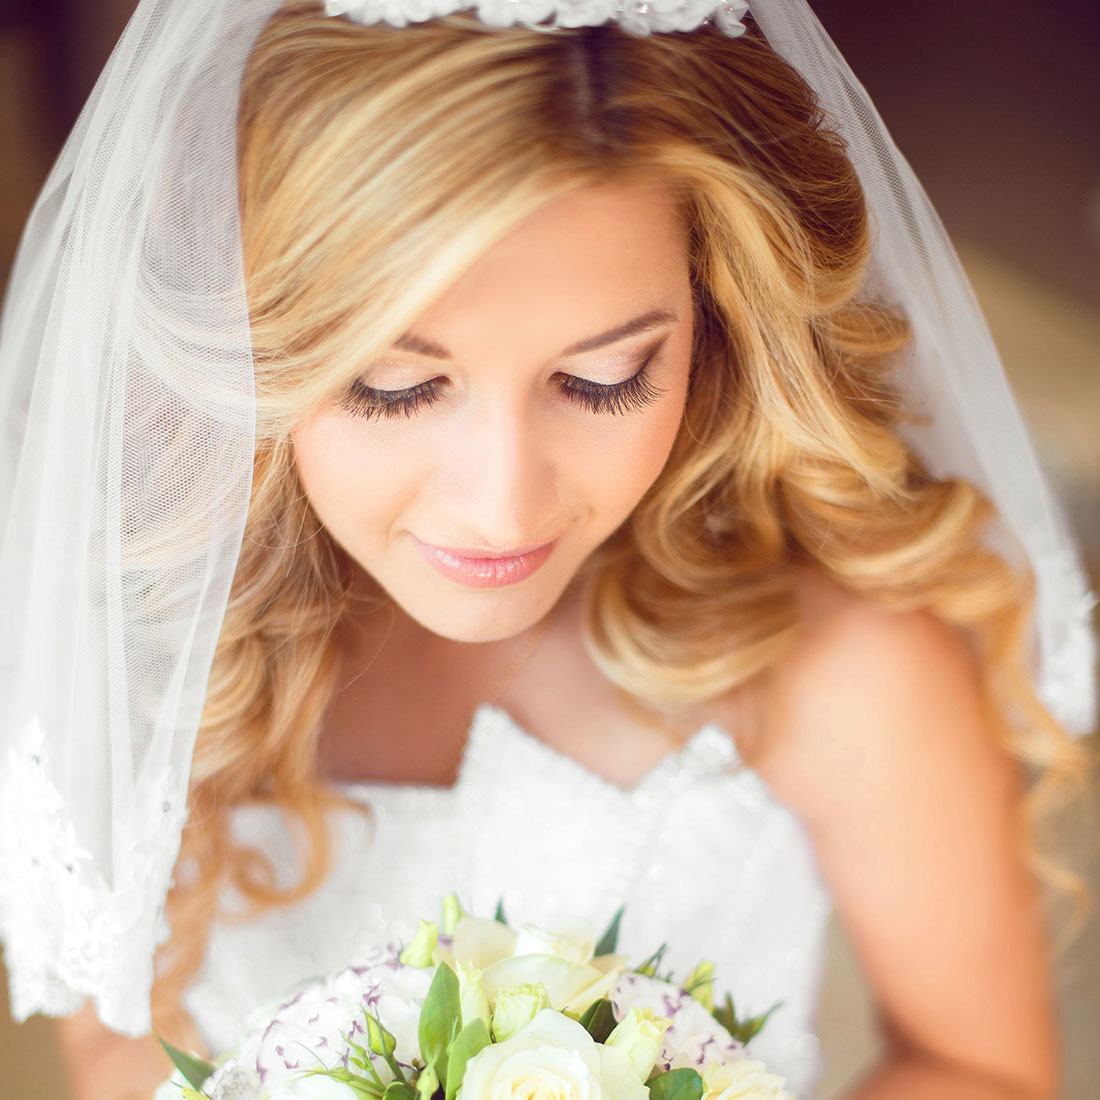 Bruid met sluier en bruidskapsel van los blond haar met slagen, krullen en lok kijkt naar haar bruidsboeket.